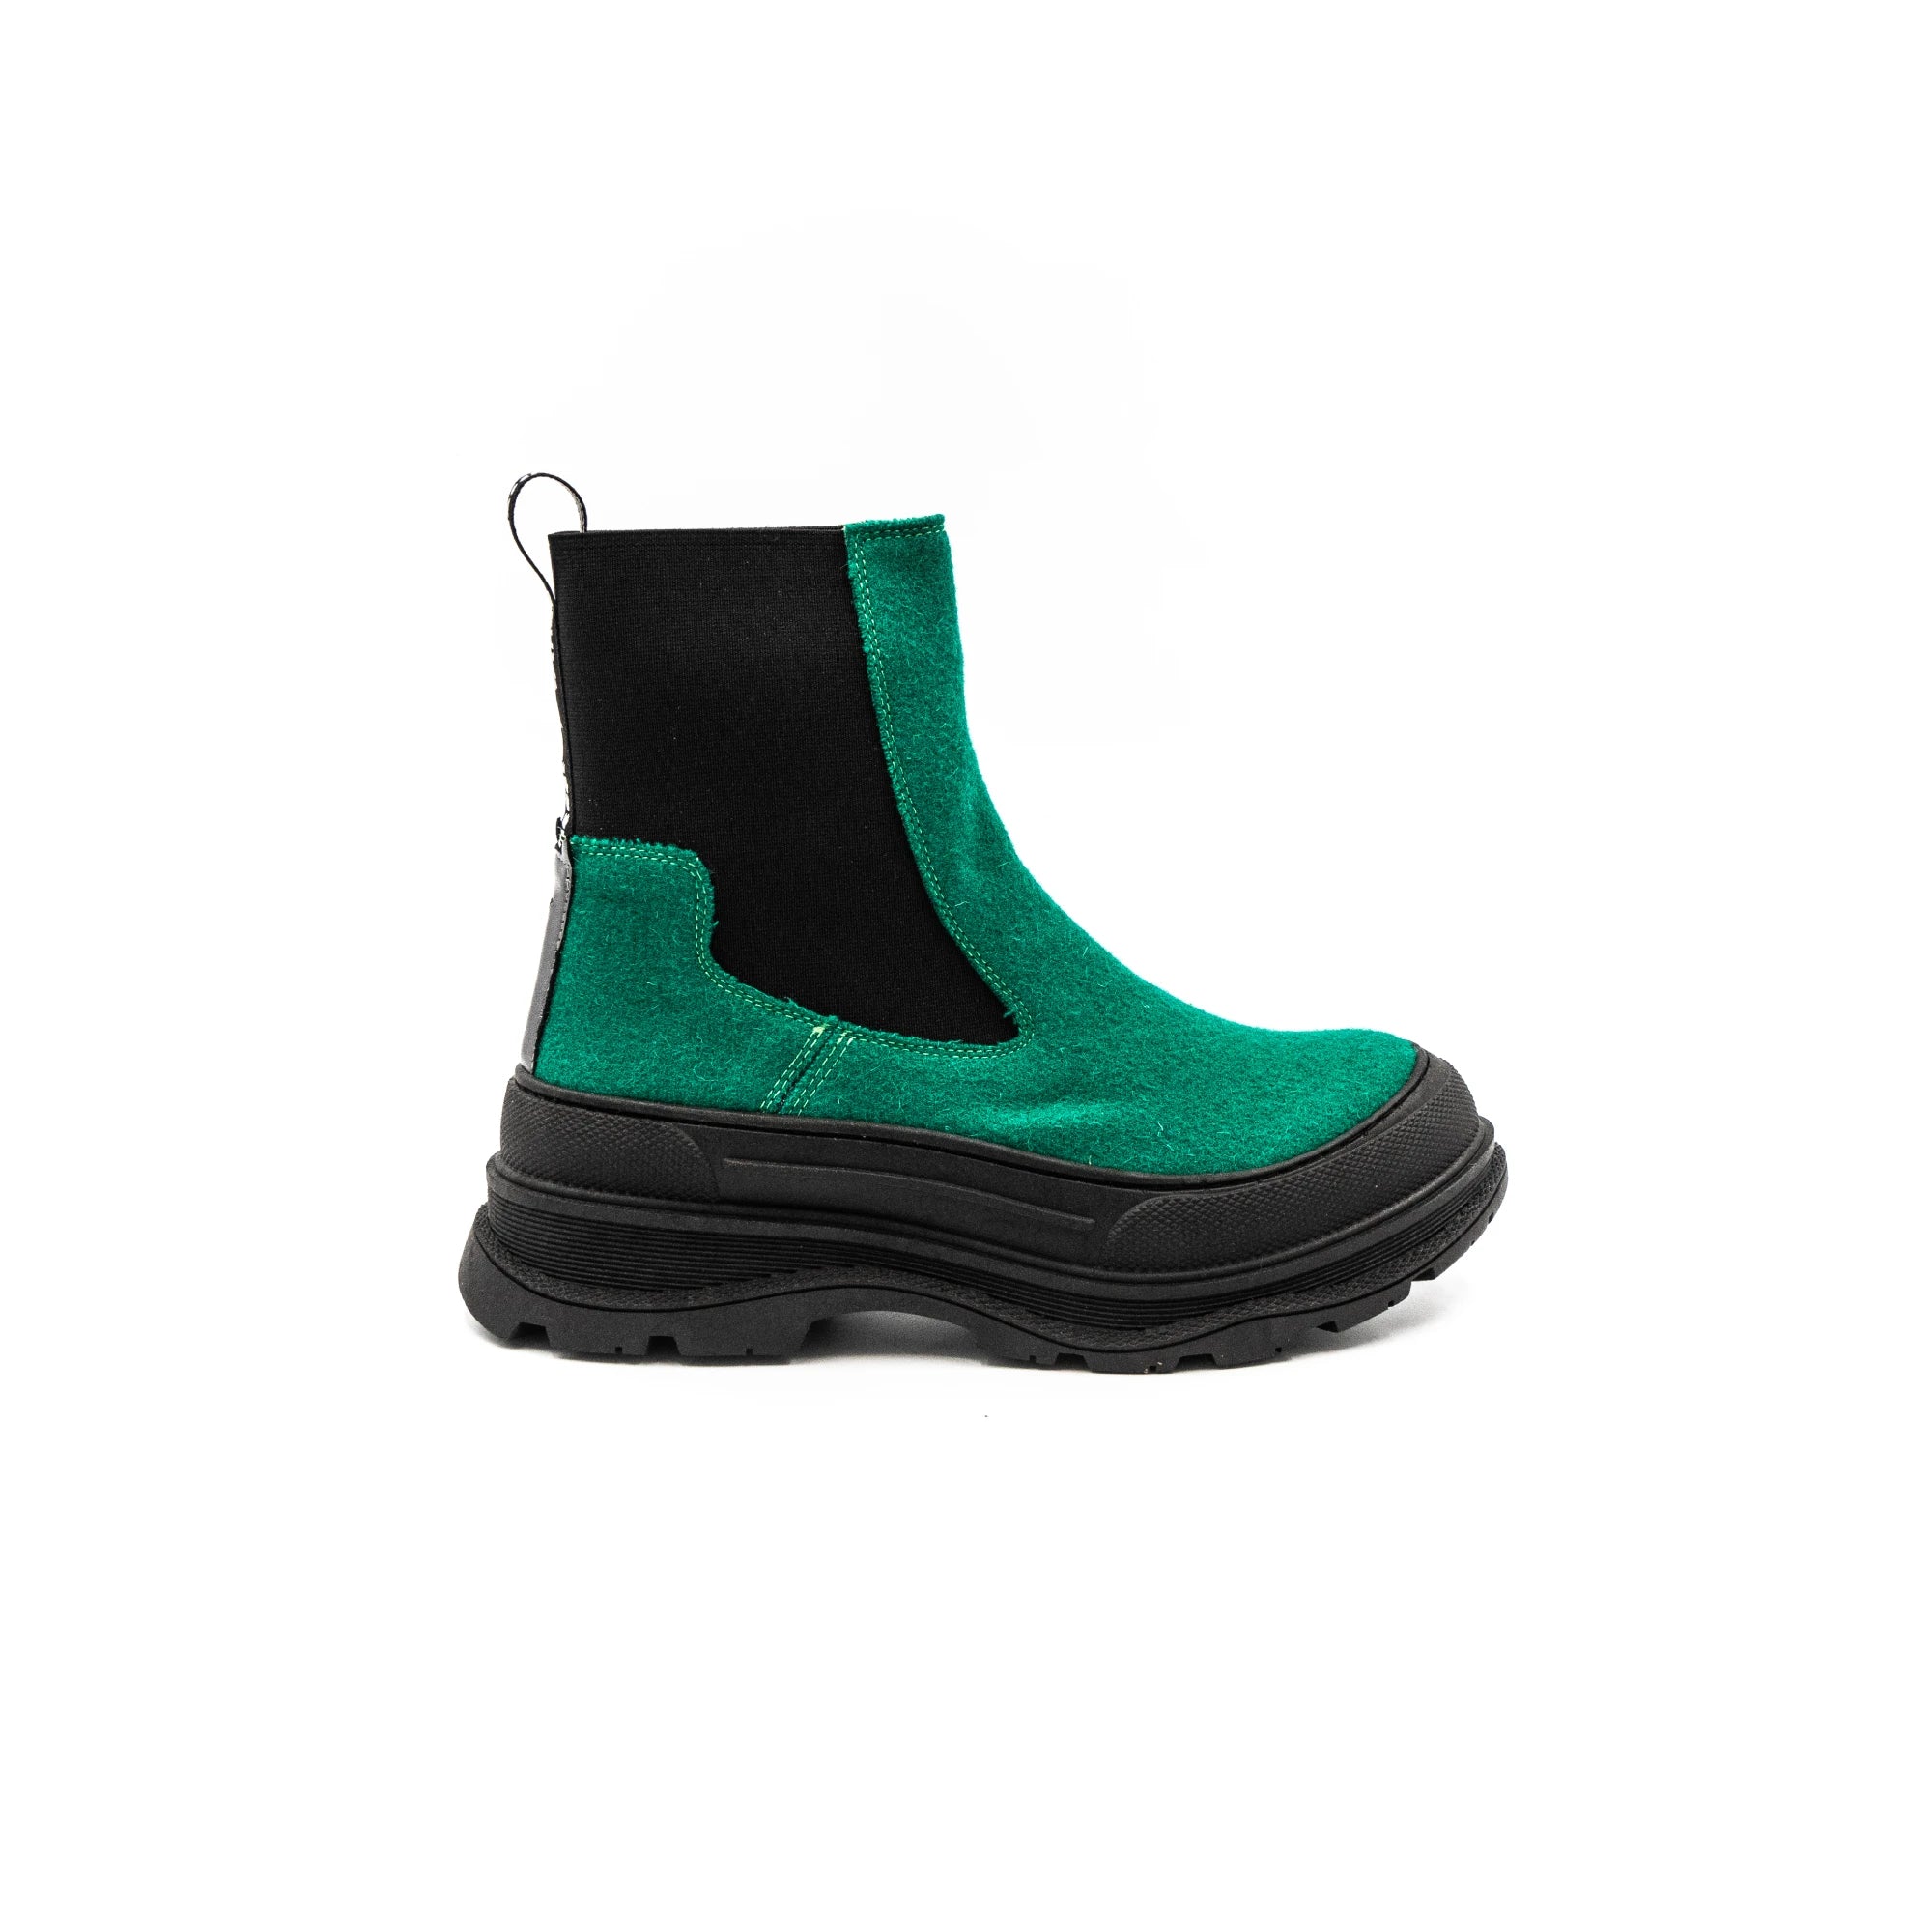 Green high rubber boots in burel.